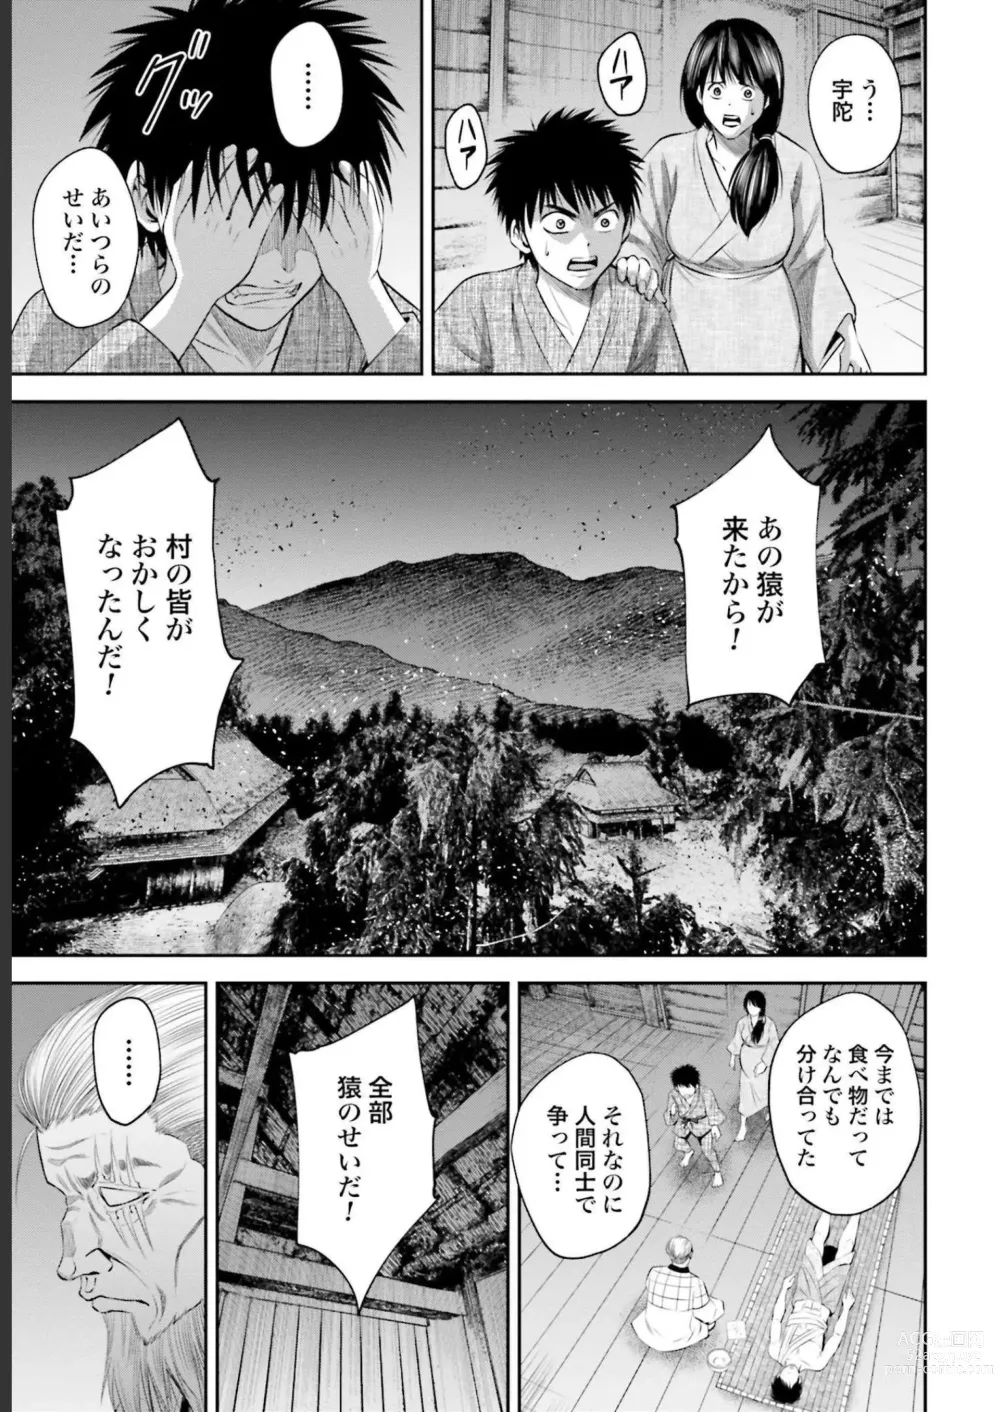 Page 153 of manga Sarumane Vol. 3